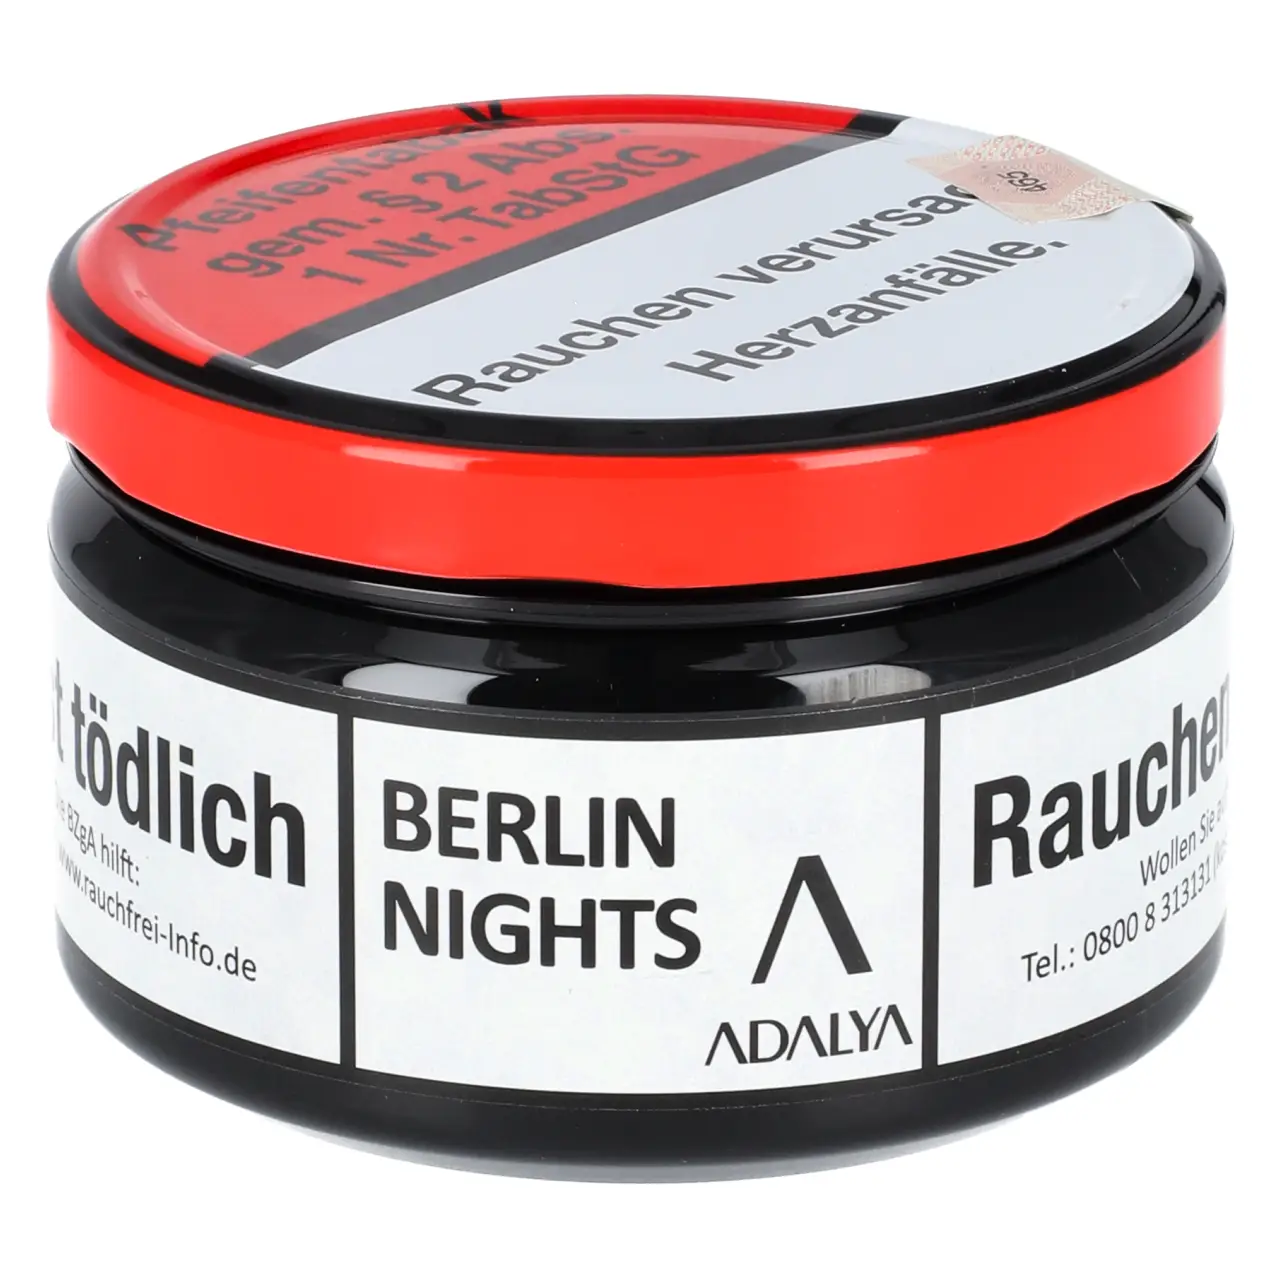 Adalya Pfeifentabak Berlin Nights 100g Dose